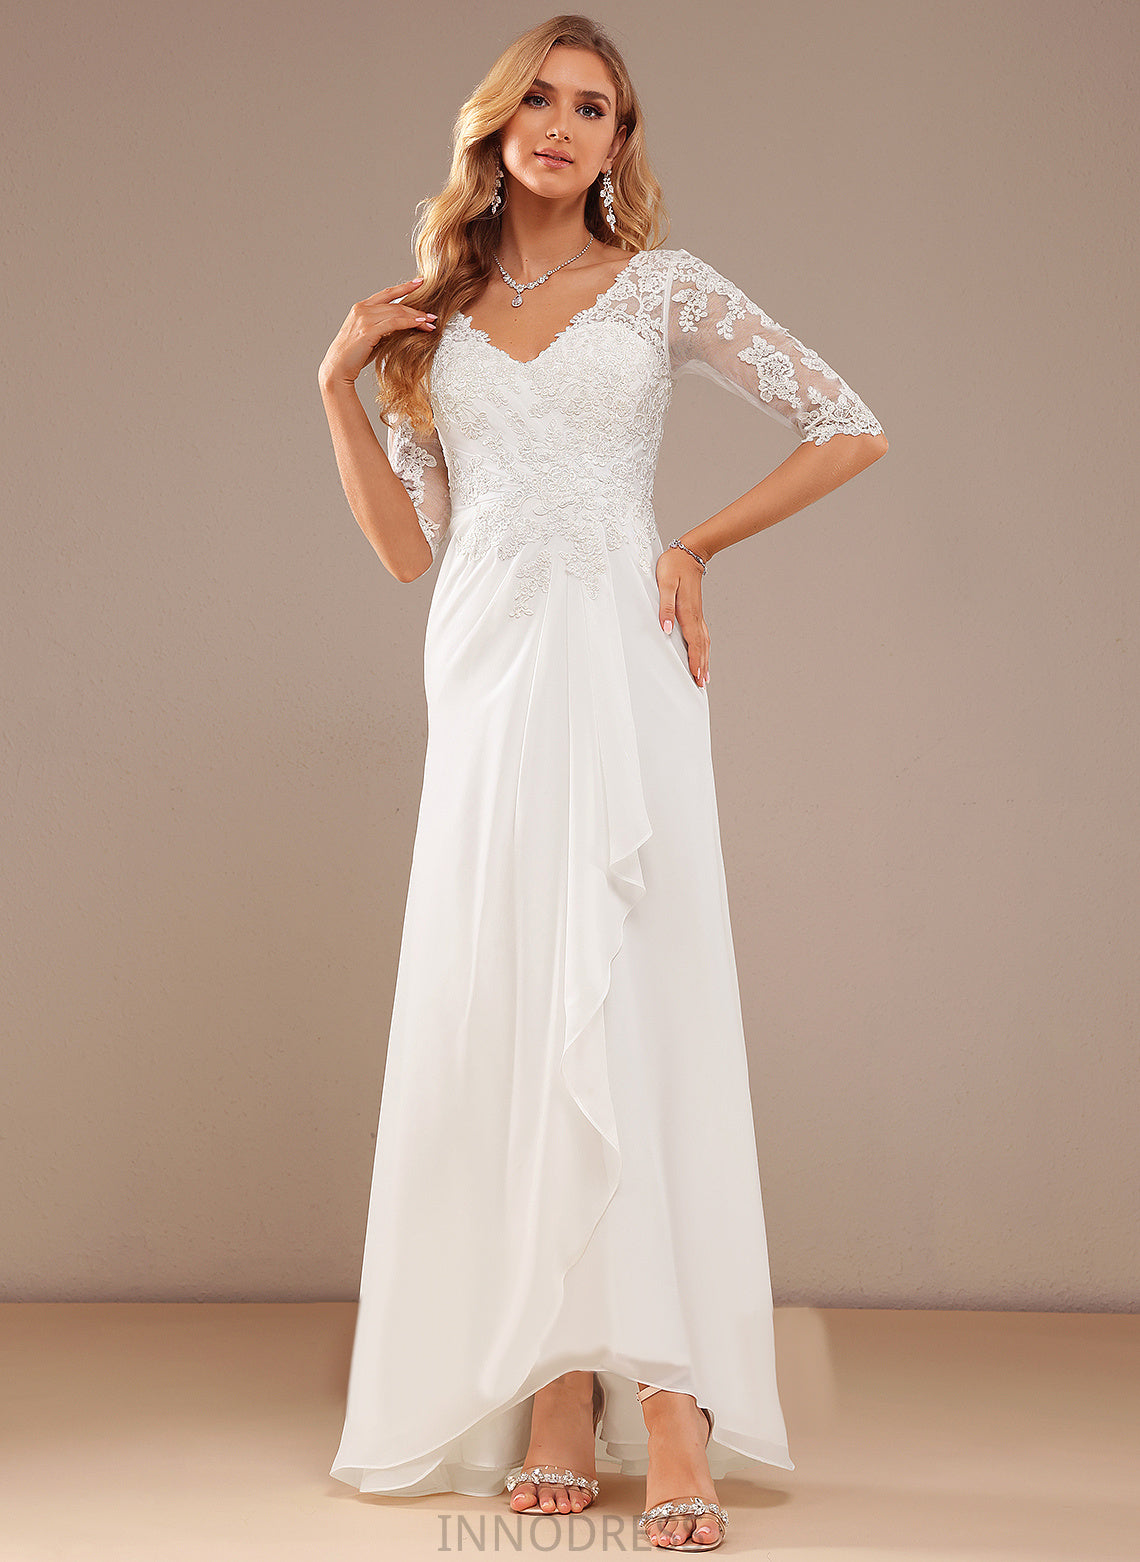 A-Line Chiffon Dress With Wedding Ruffle Lace Lace V-neck Wedding Dresses Asymmetrical Tianna